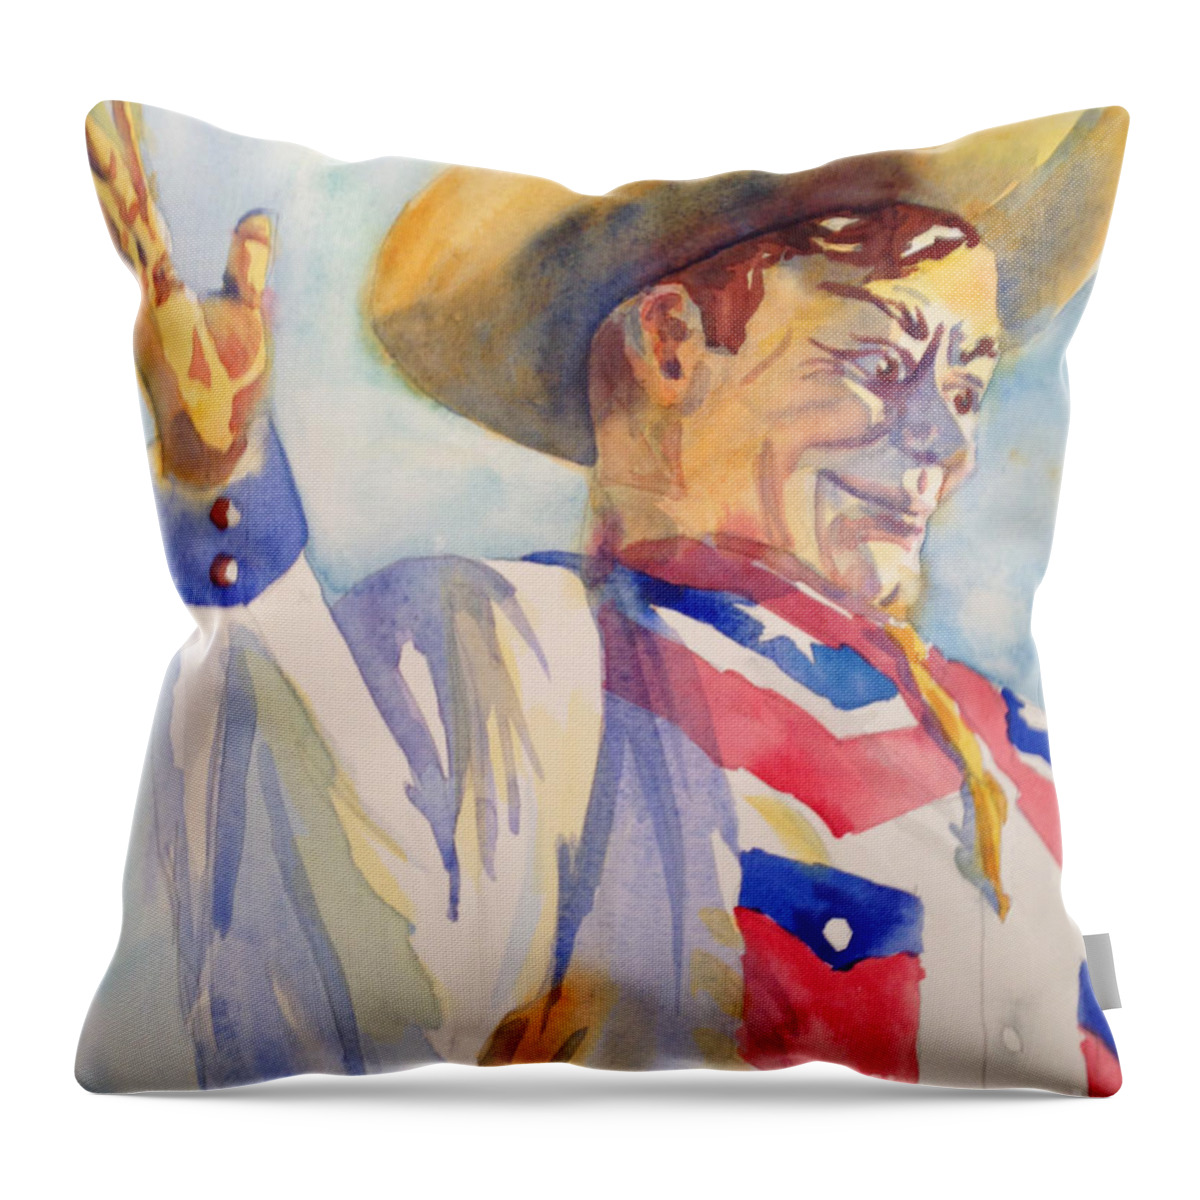 Big Tex Throw Pillow featuring the painting Big Tex by Liana Yarckin